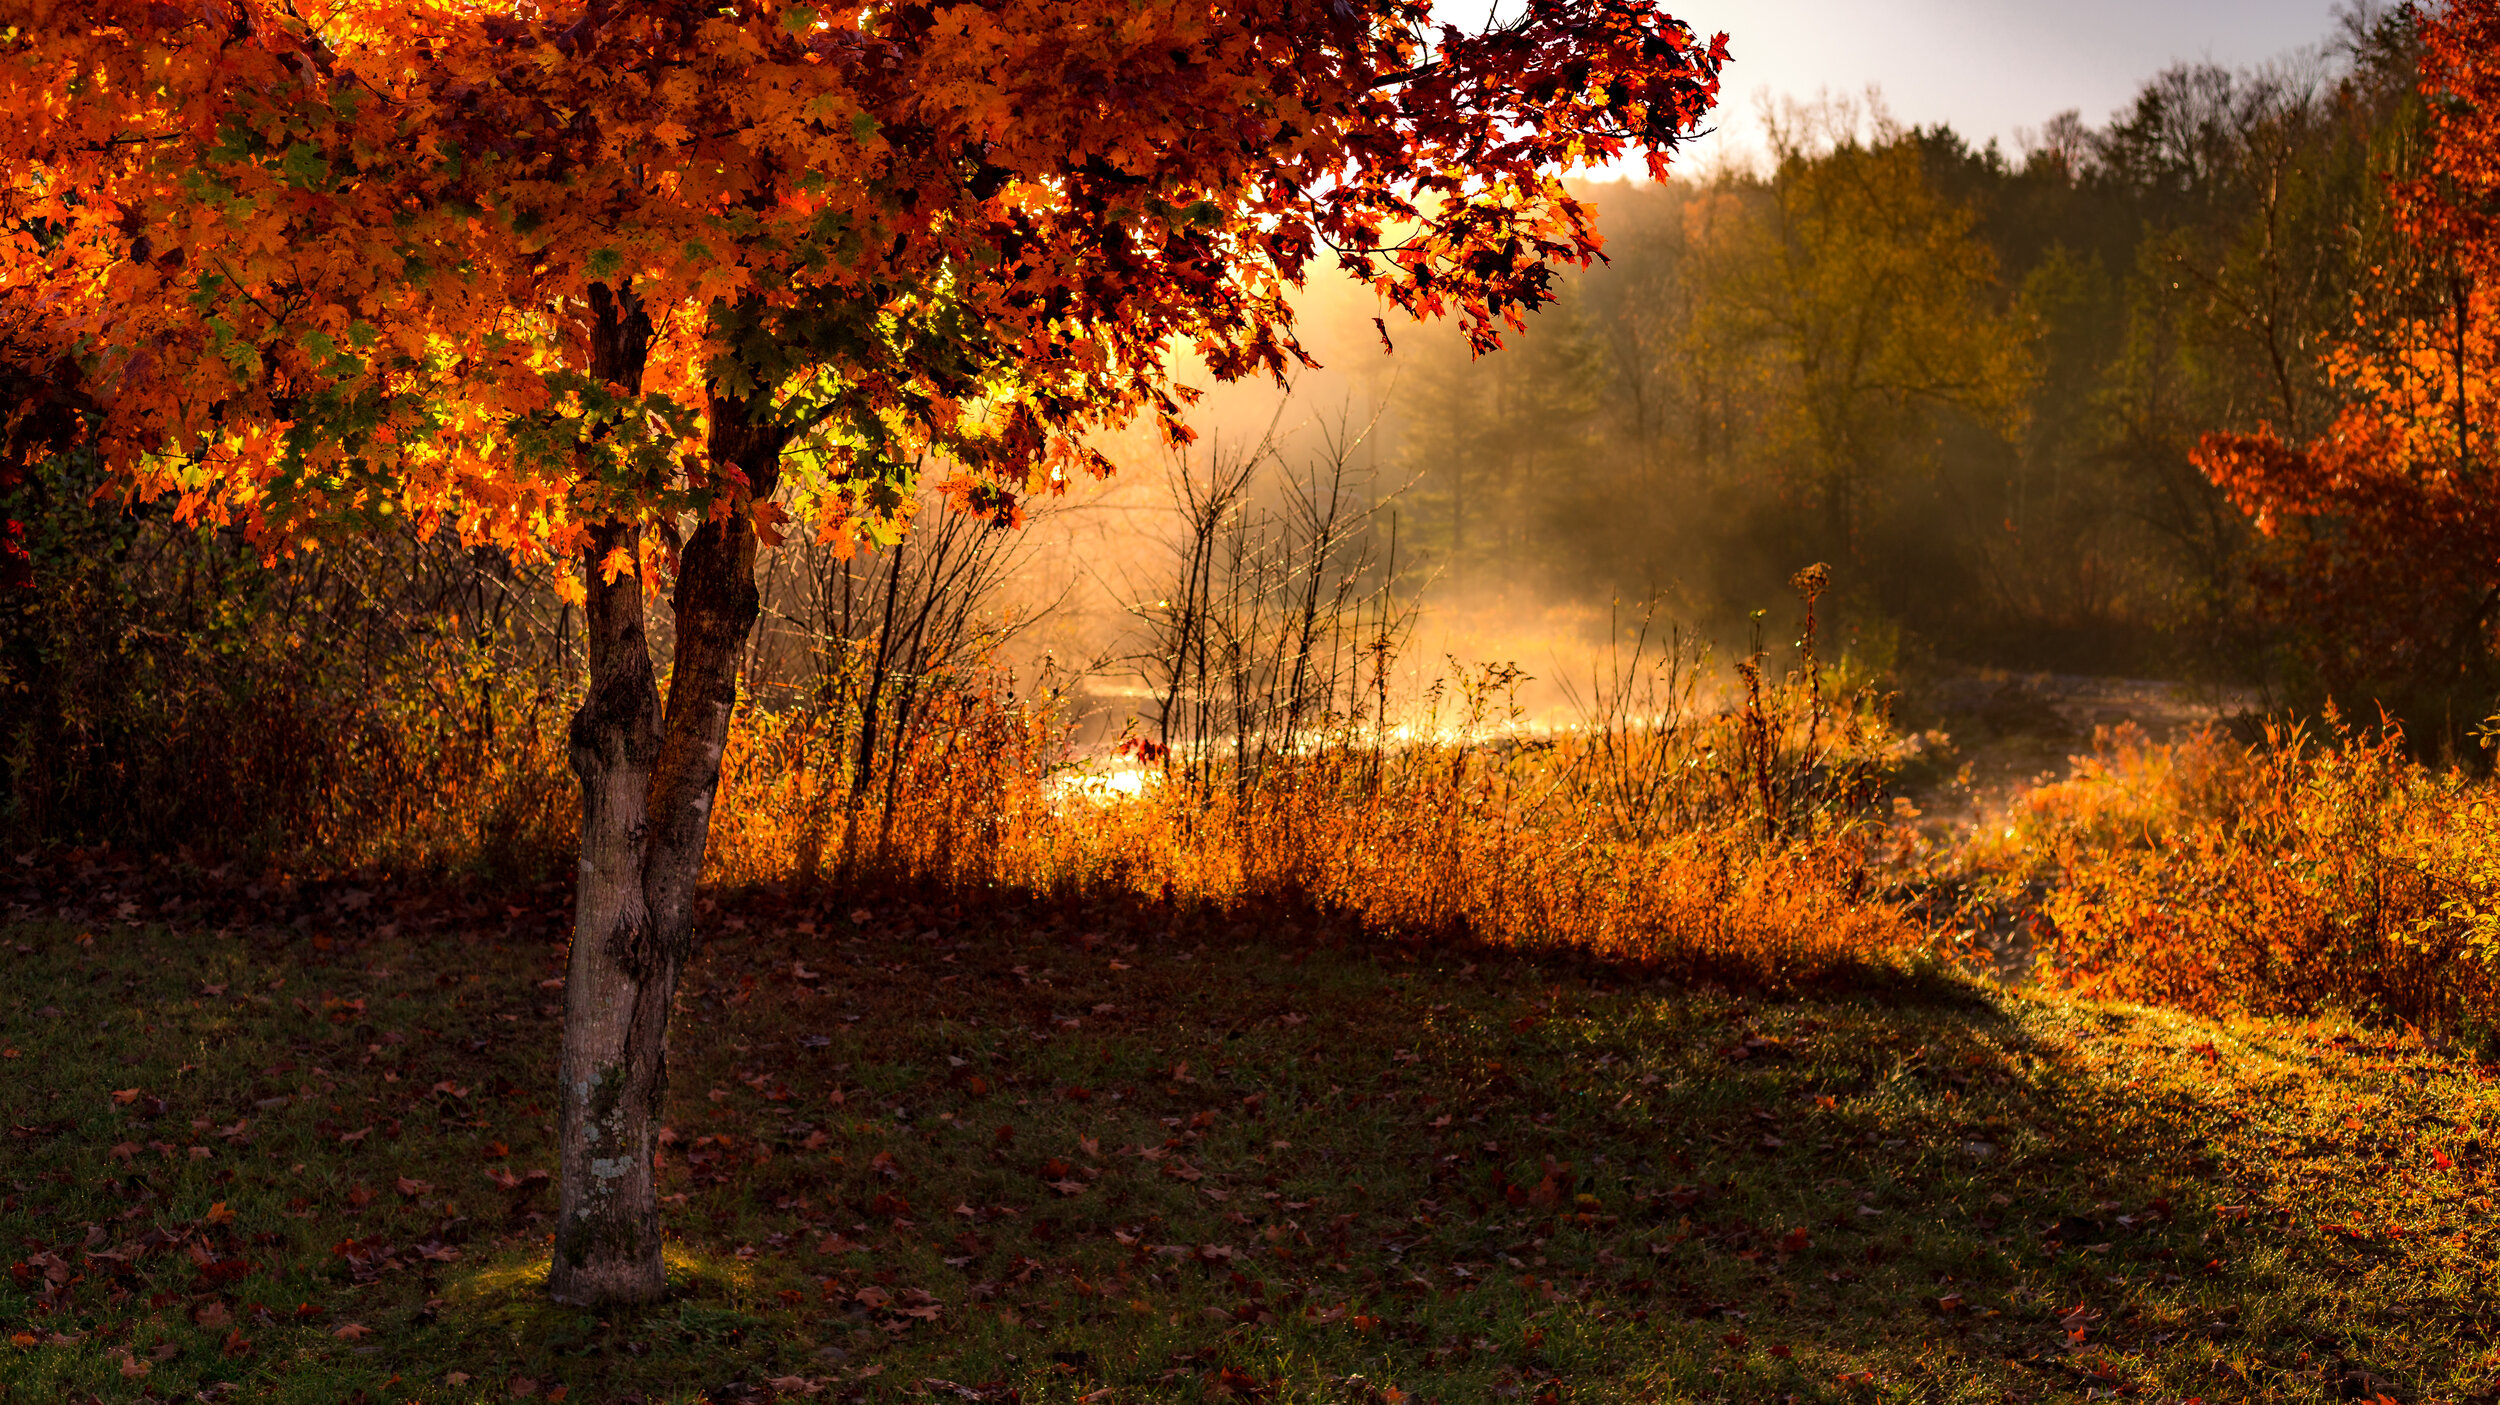 Fall sunrise through the trees in Underhill